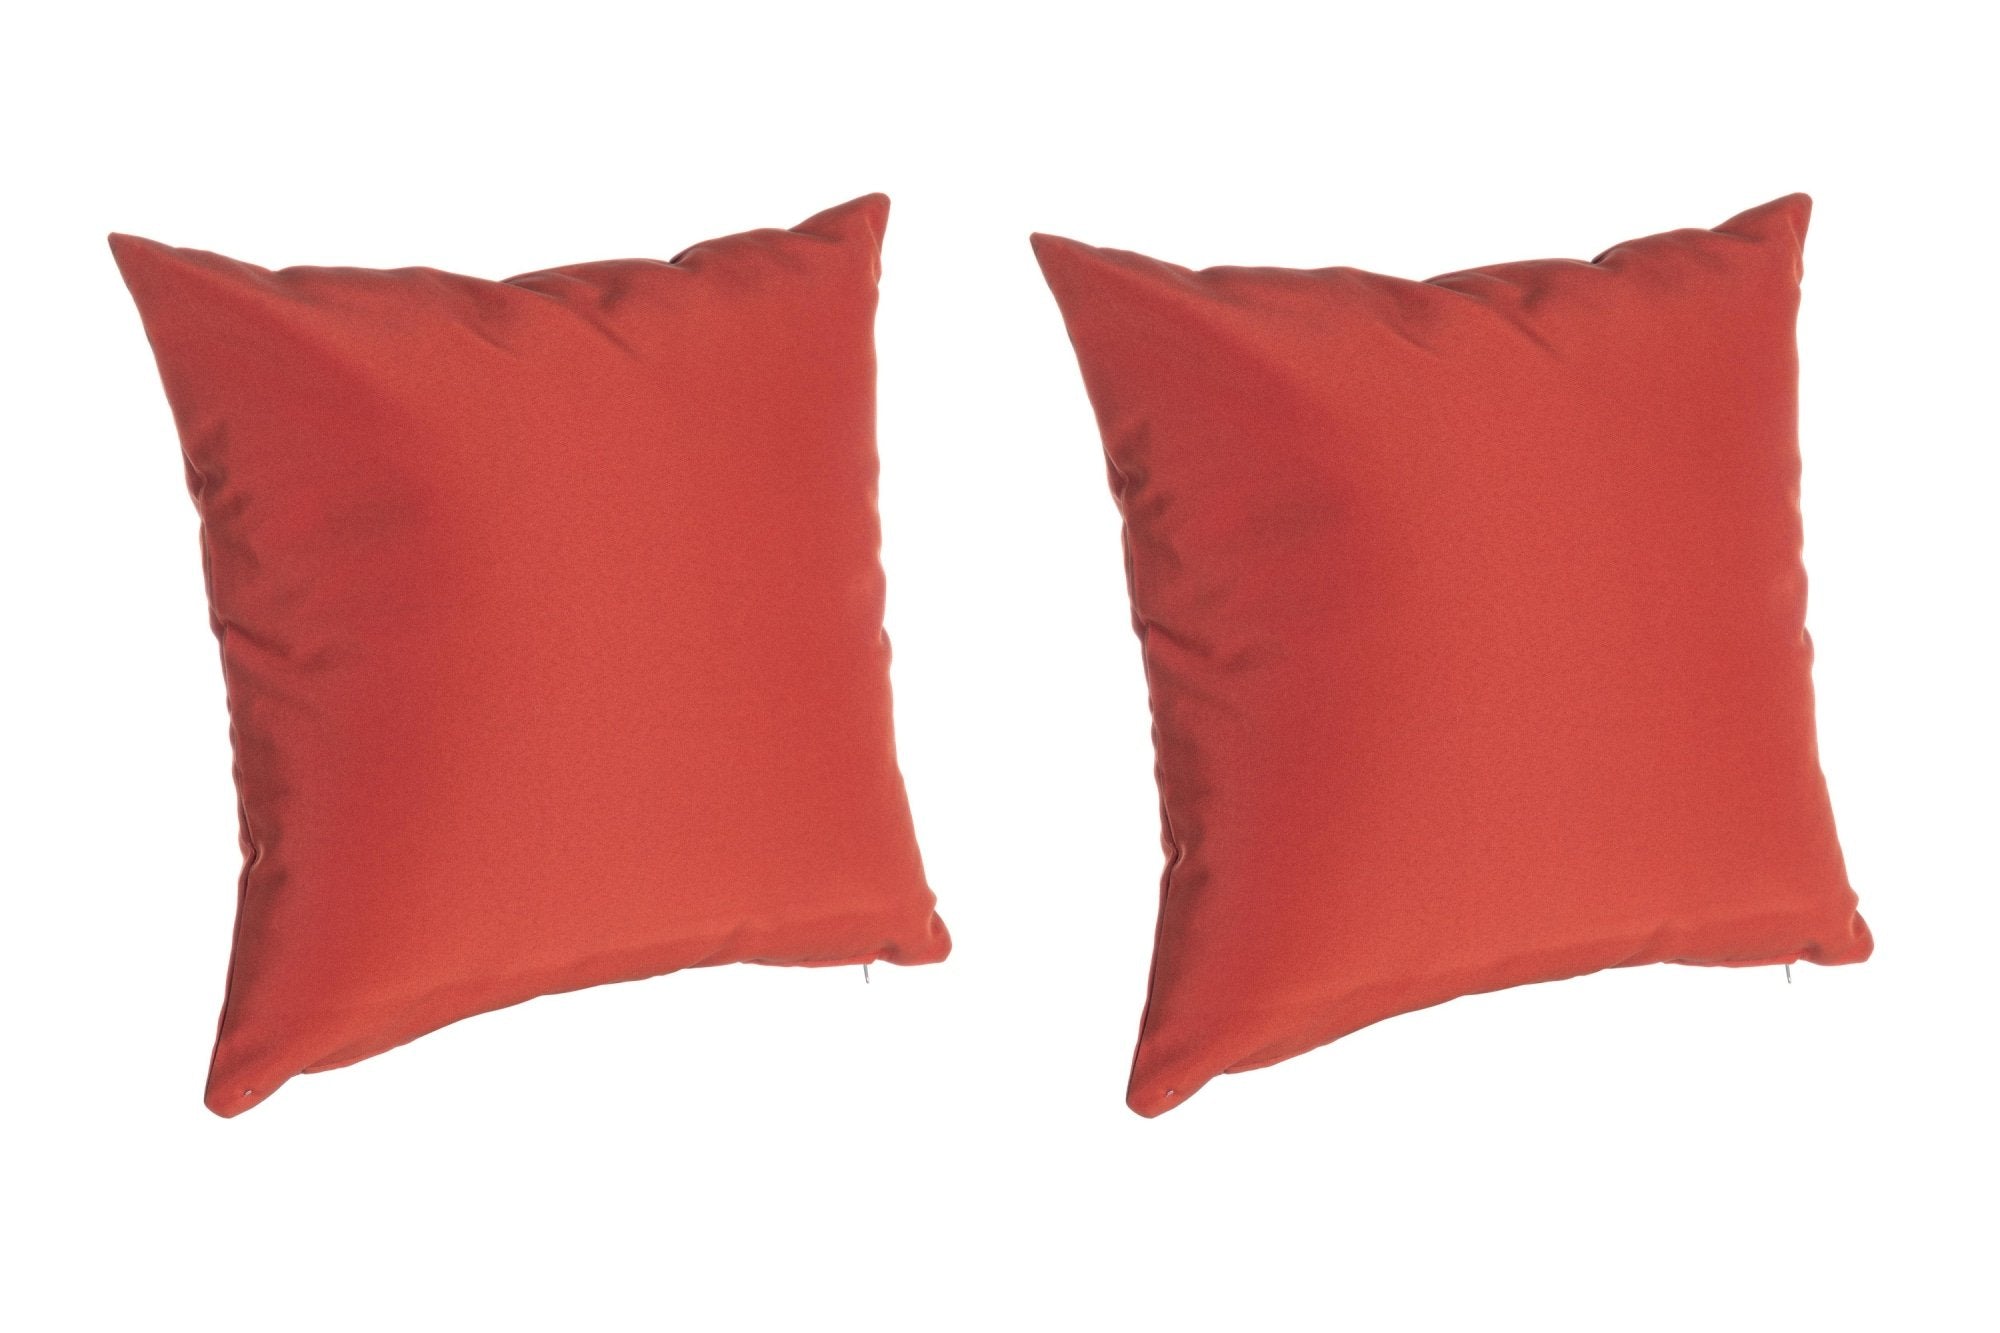 Párnahuzat - ORANGE piros 100% polyester párnahuzat